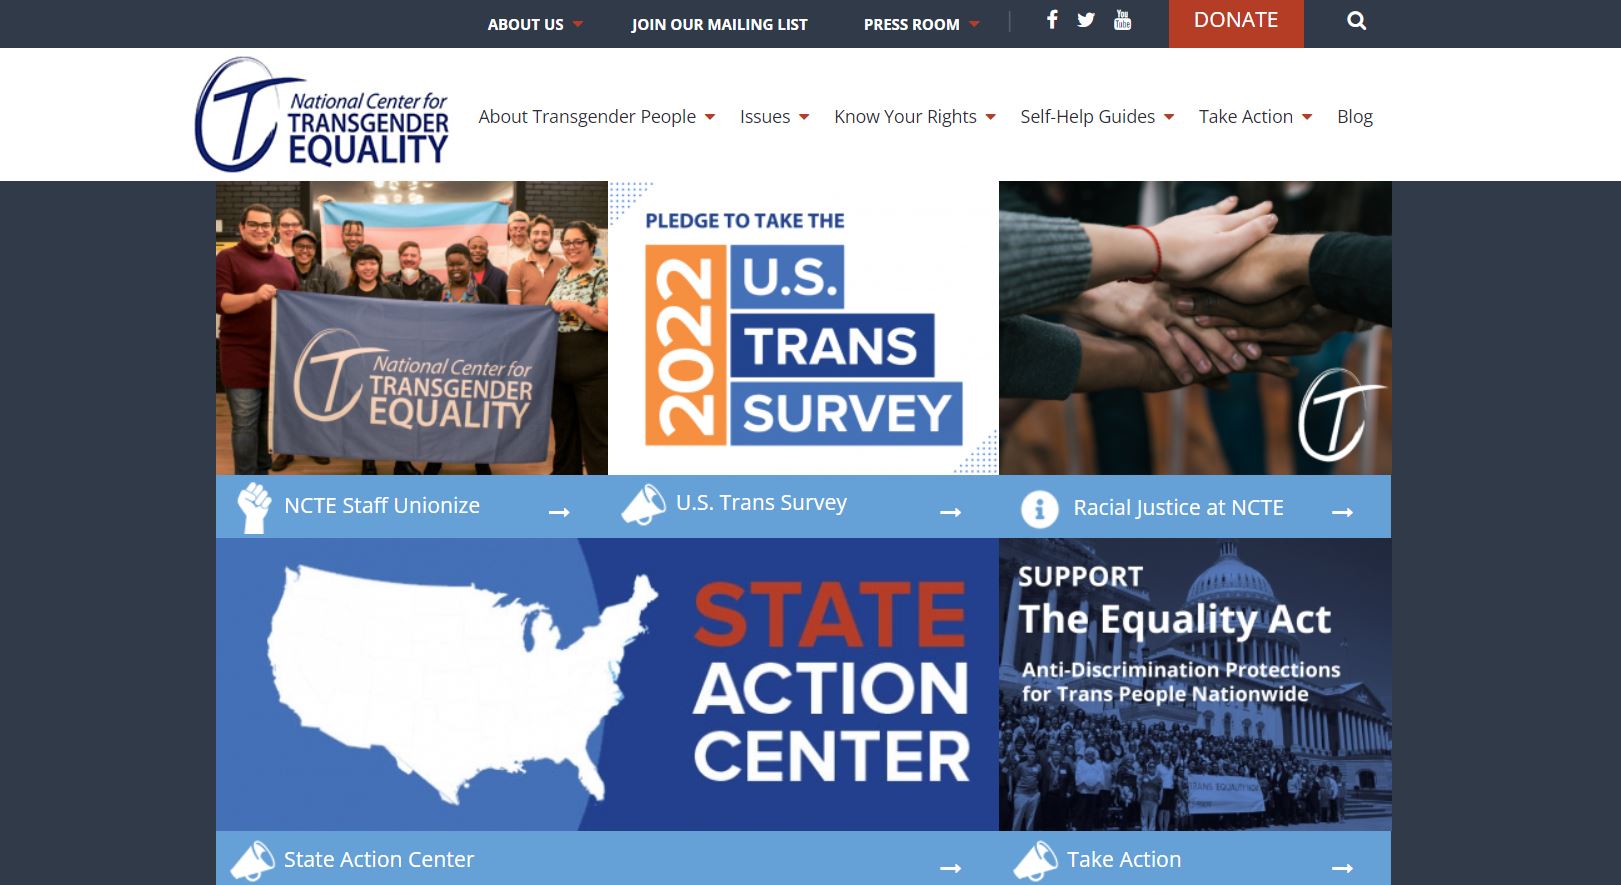 The National Center for Transgender Equality